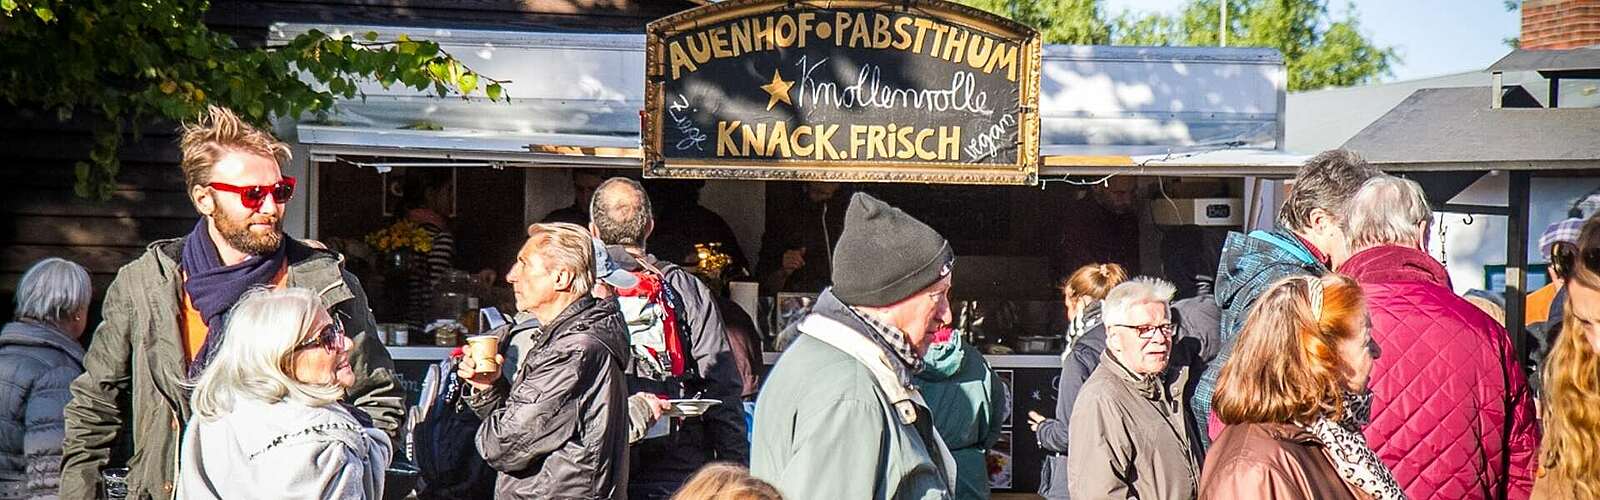 Foodtruck Knack.frisch,
        
    

        
            Foto: Knack.frisch Neuruppin